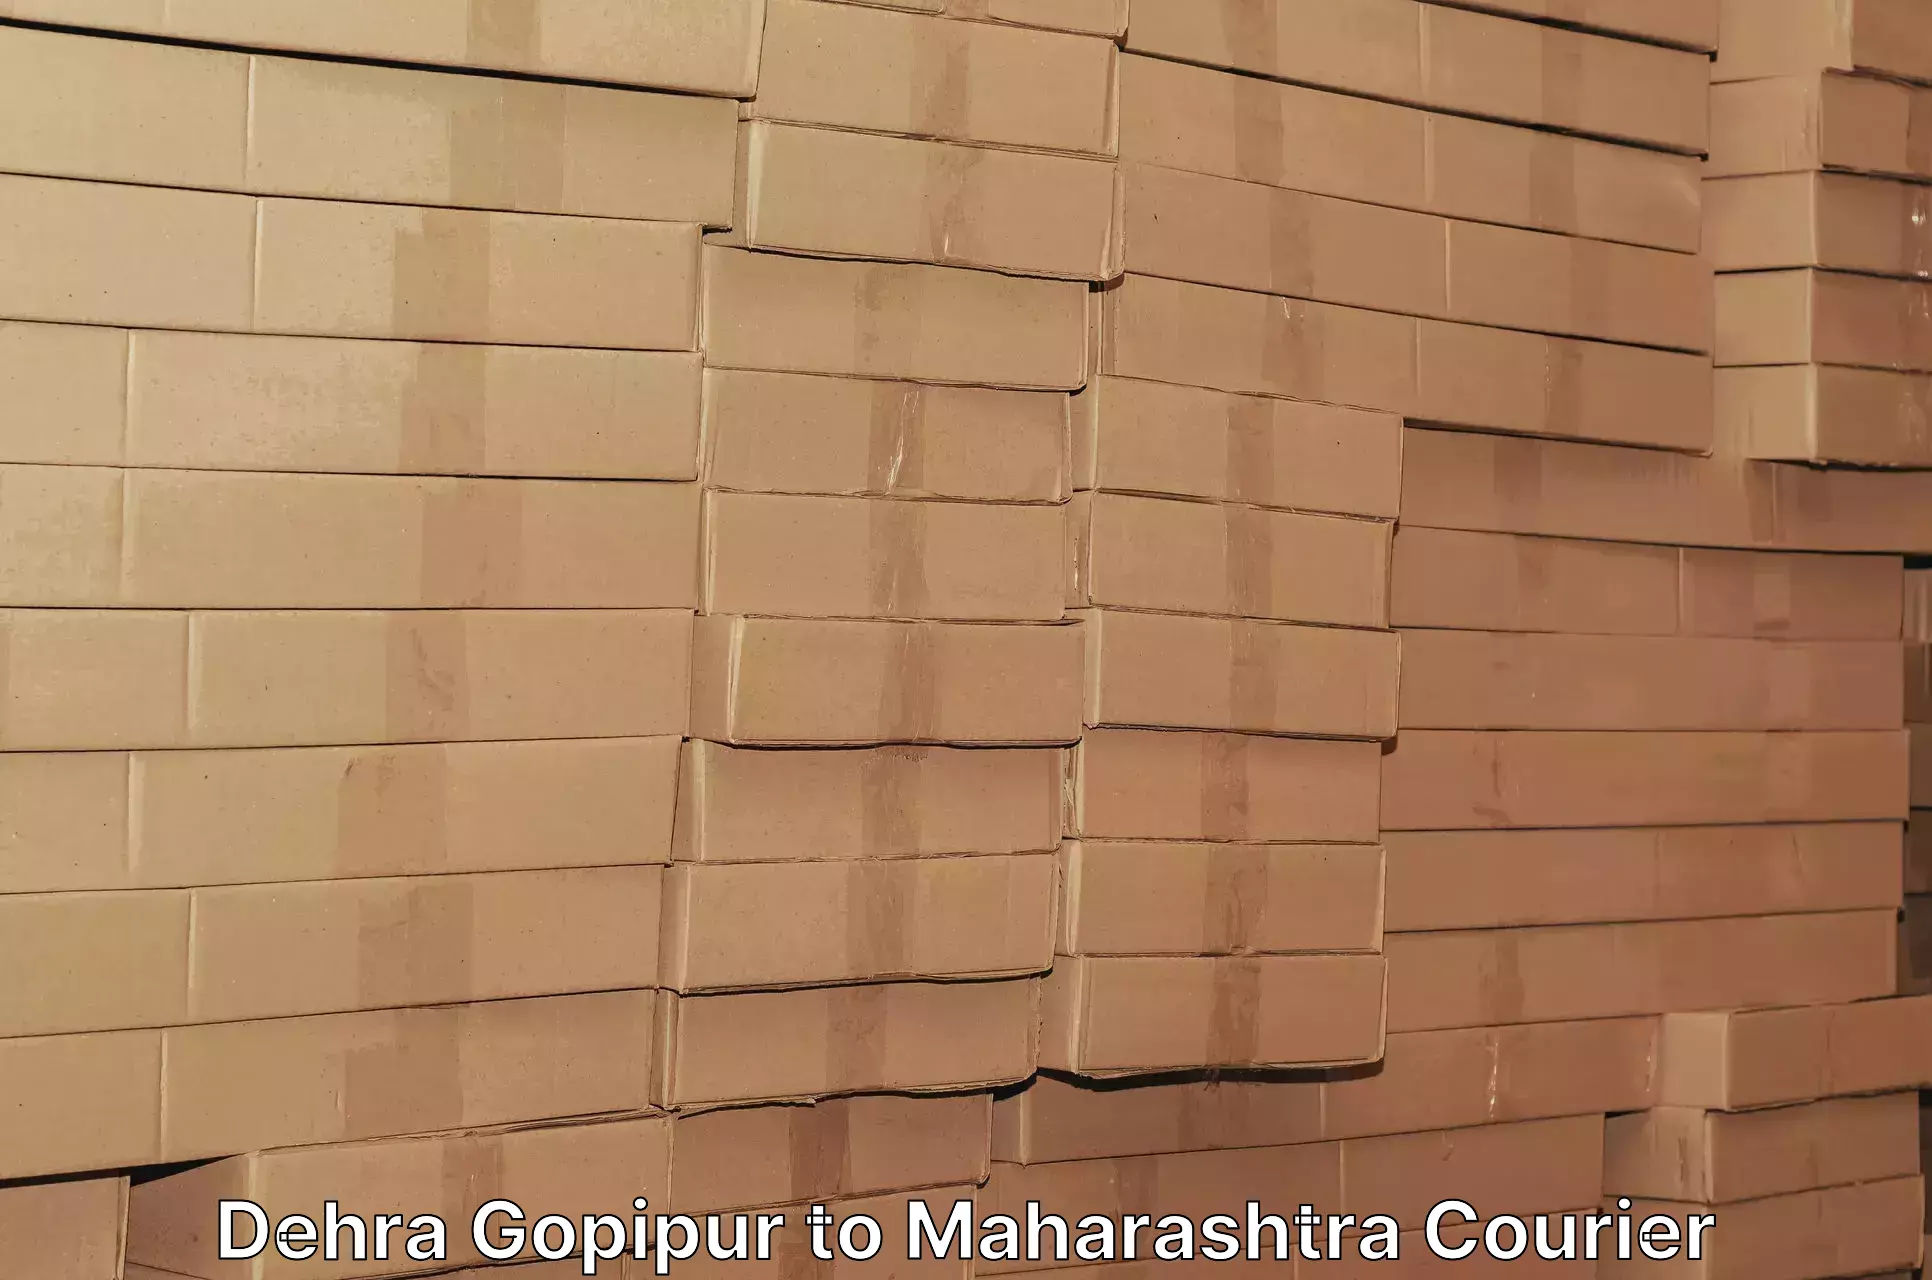 Efficient order fulfillment Dehra Gopipur to Maharashtra